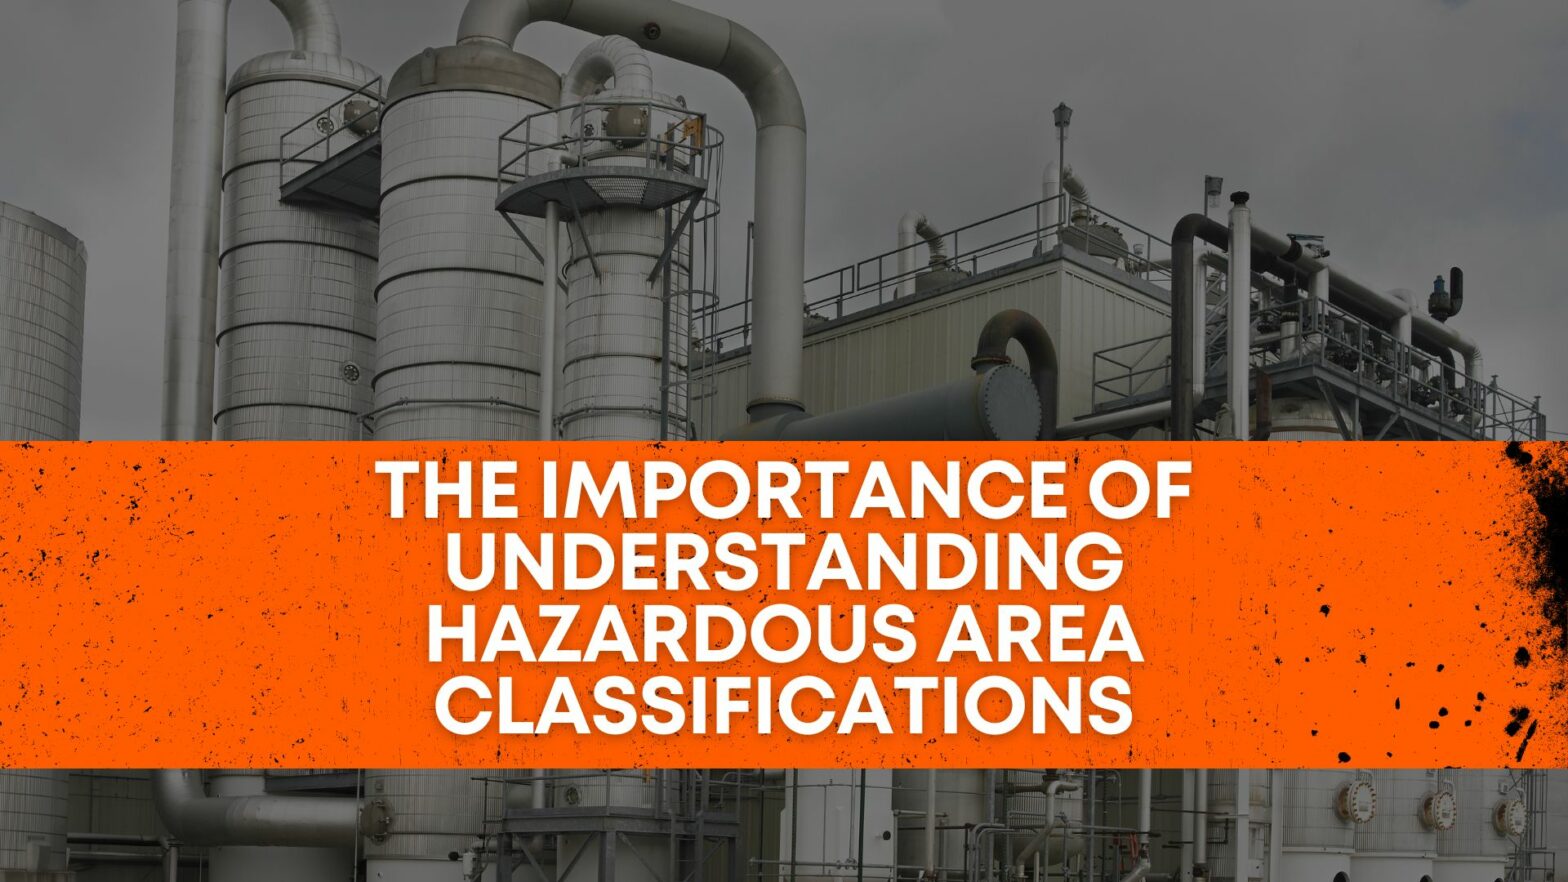 The importance of understanding hazardous area classifications